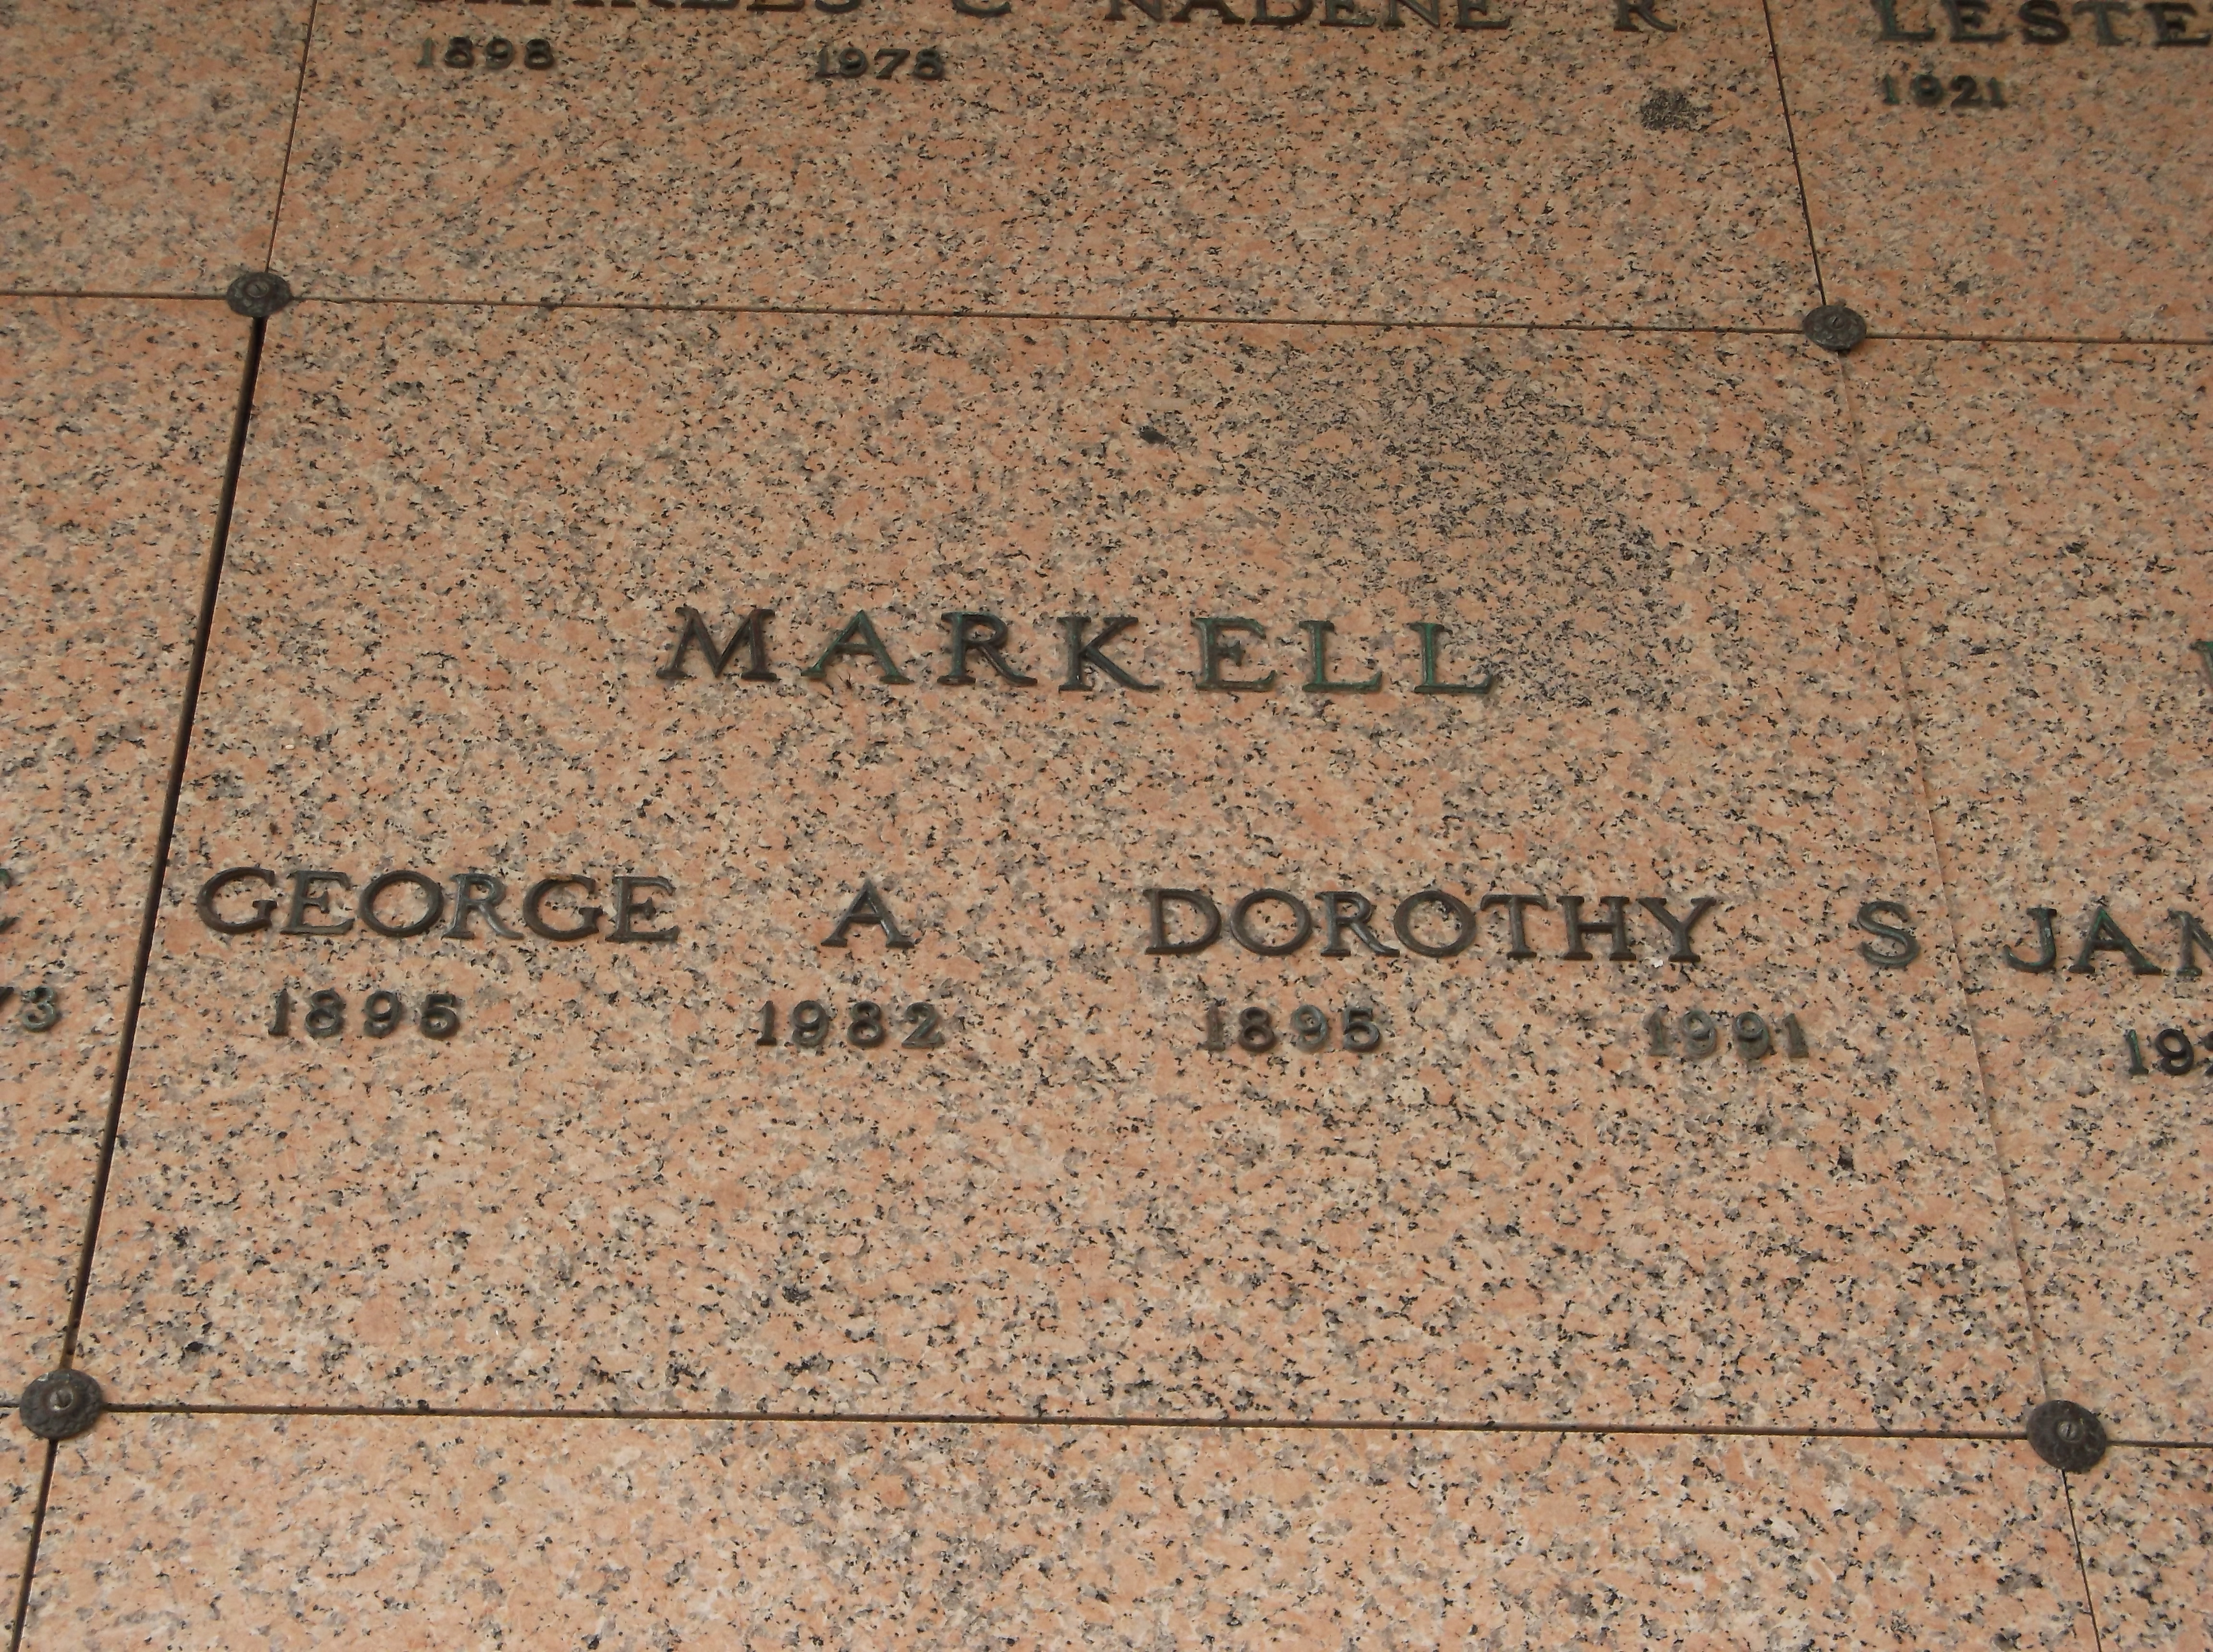 George A Markell